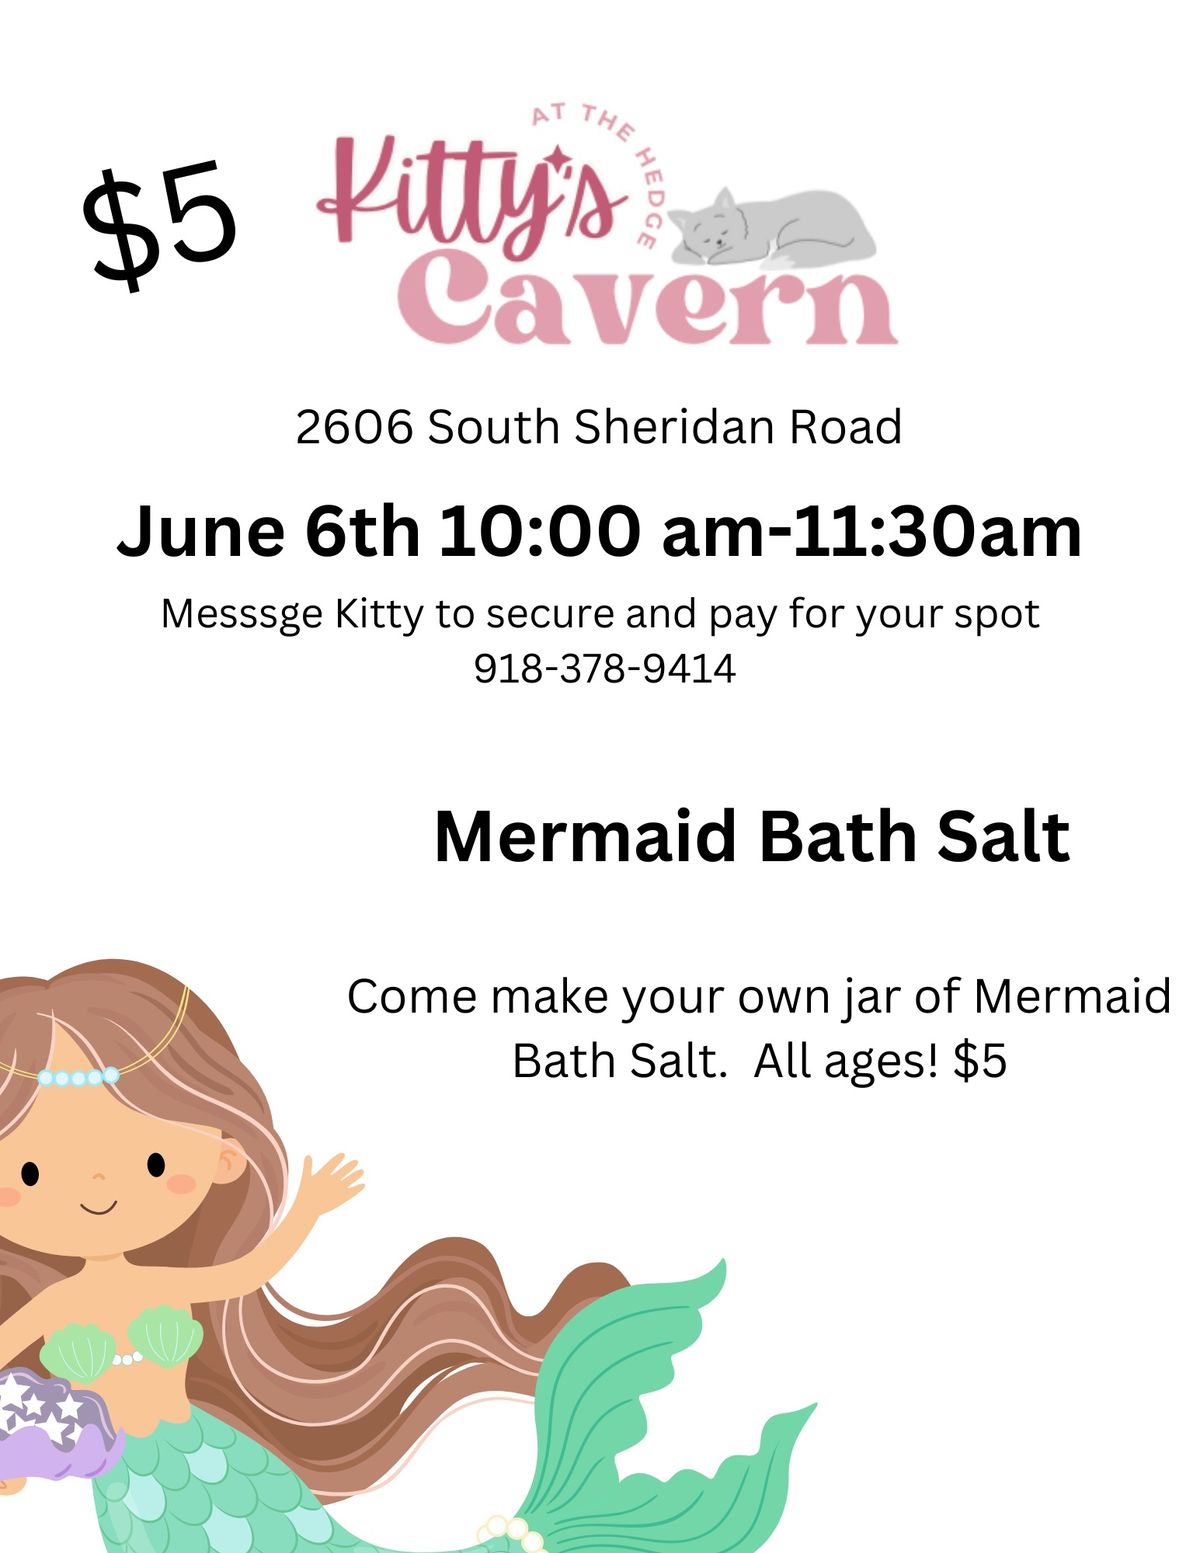 Mermaid Bath Salt